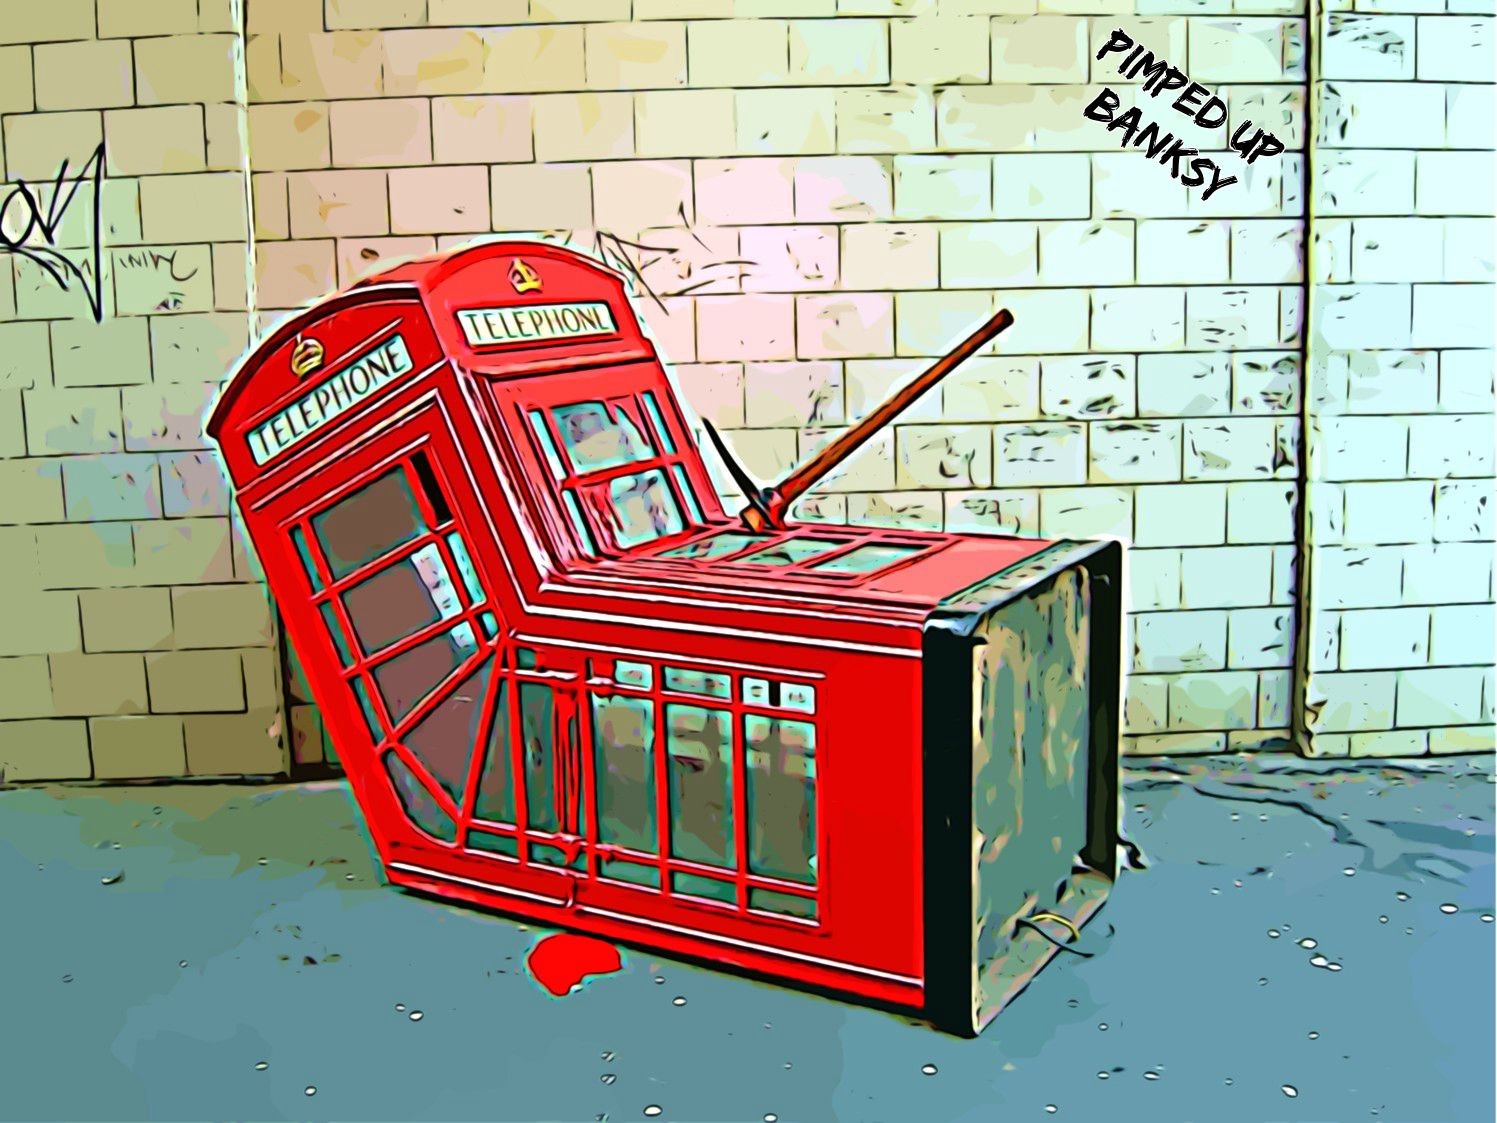 Digital Art Banksy Graffiti London Phone Box Humor 1497x1123